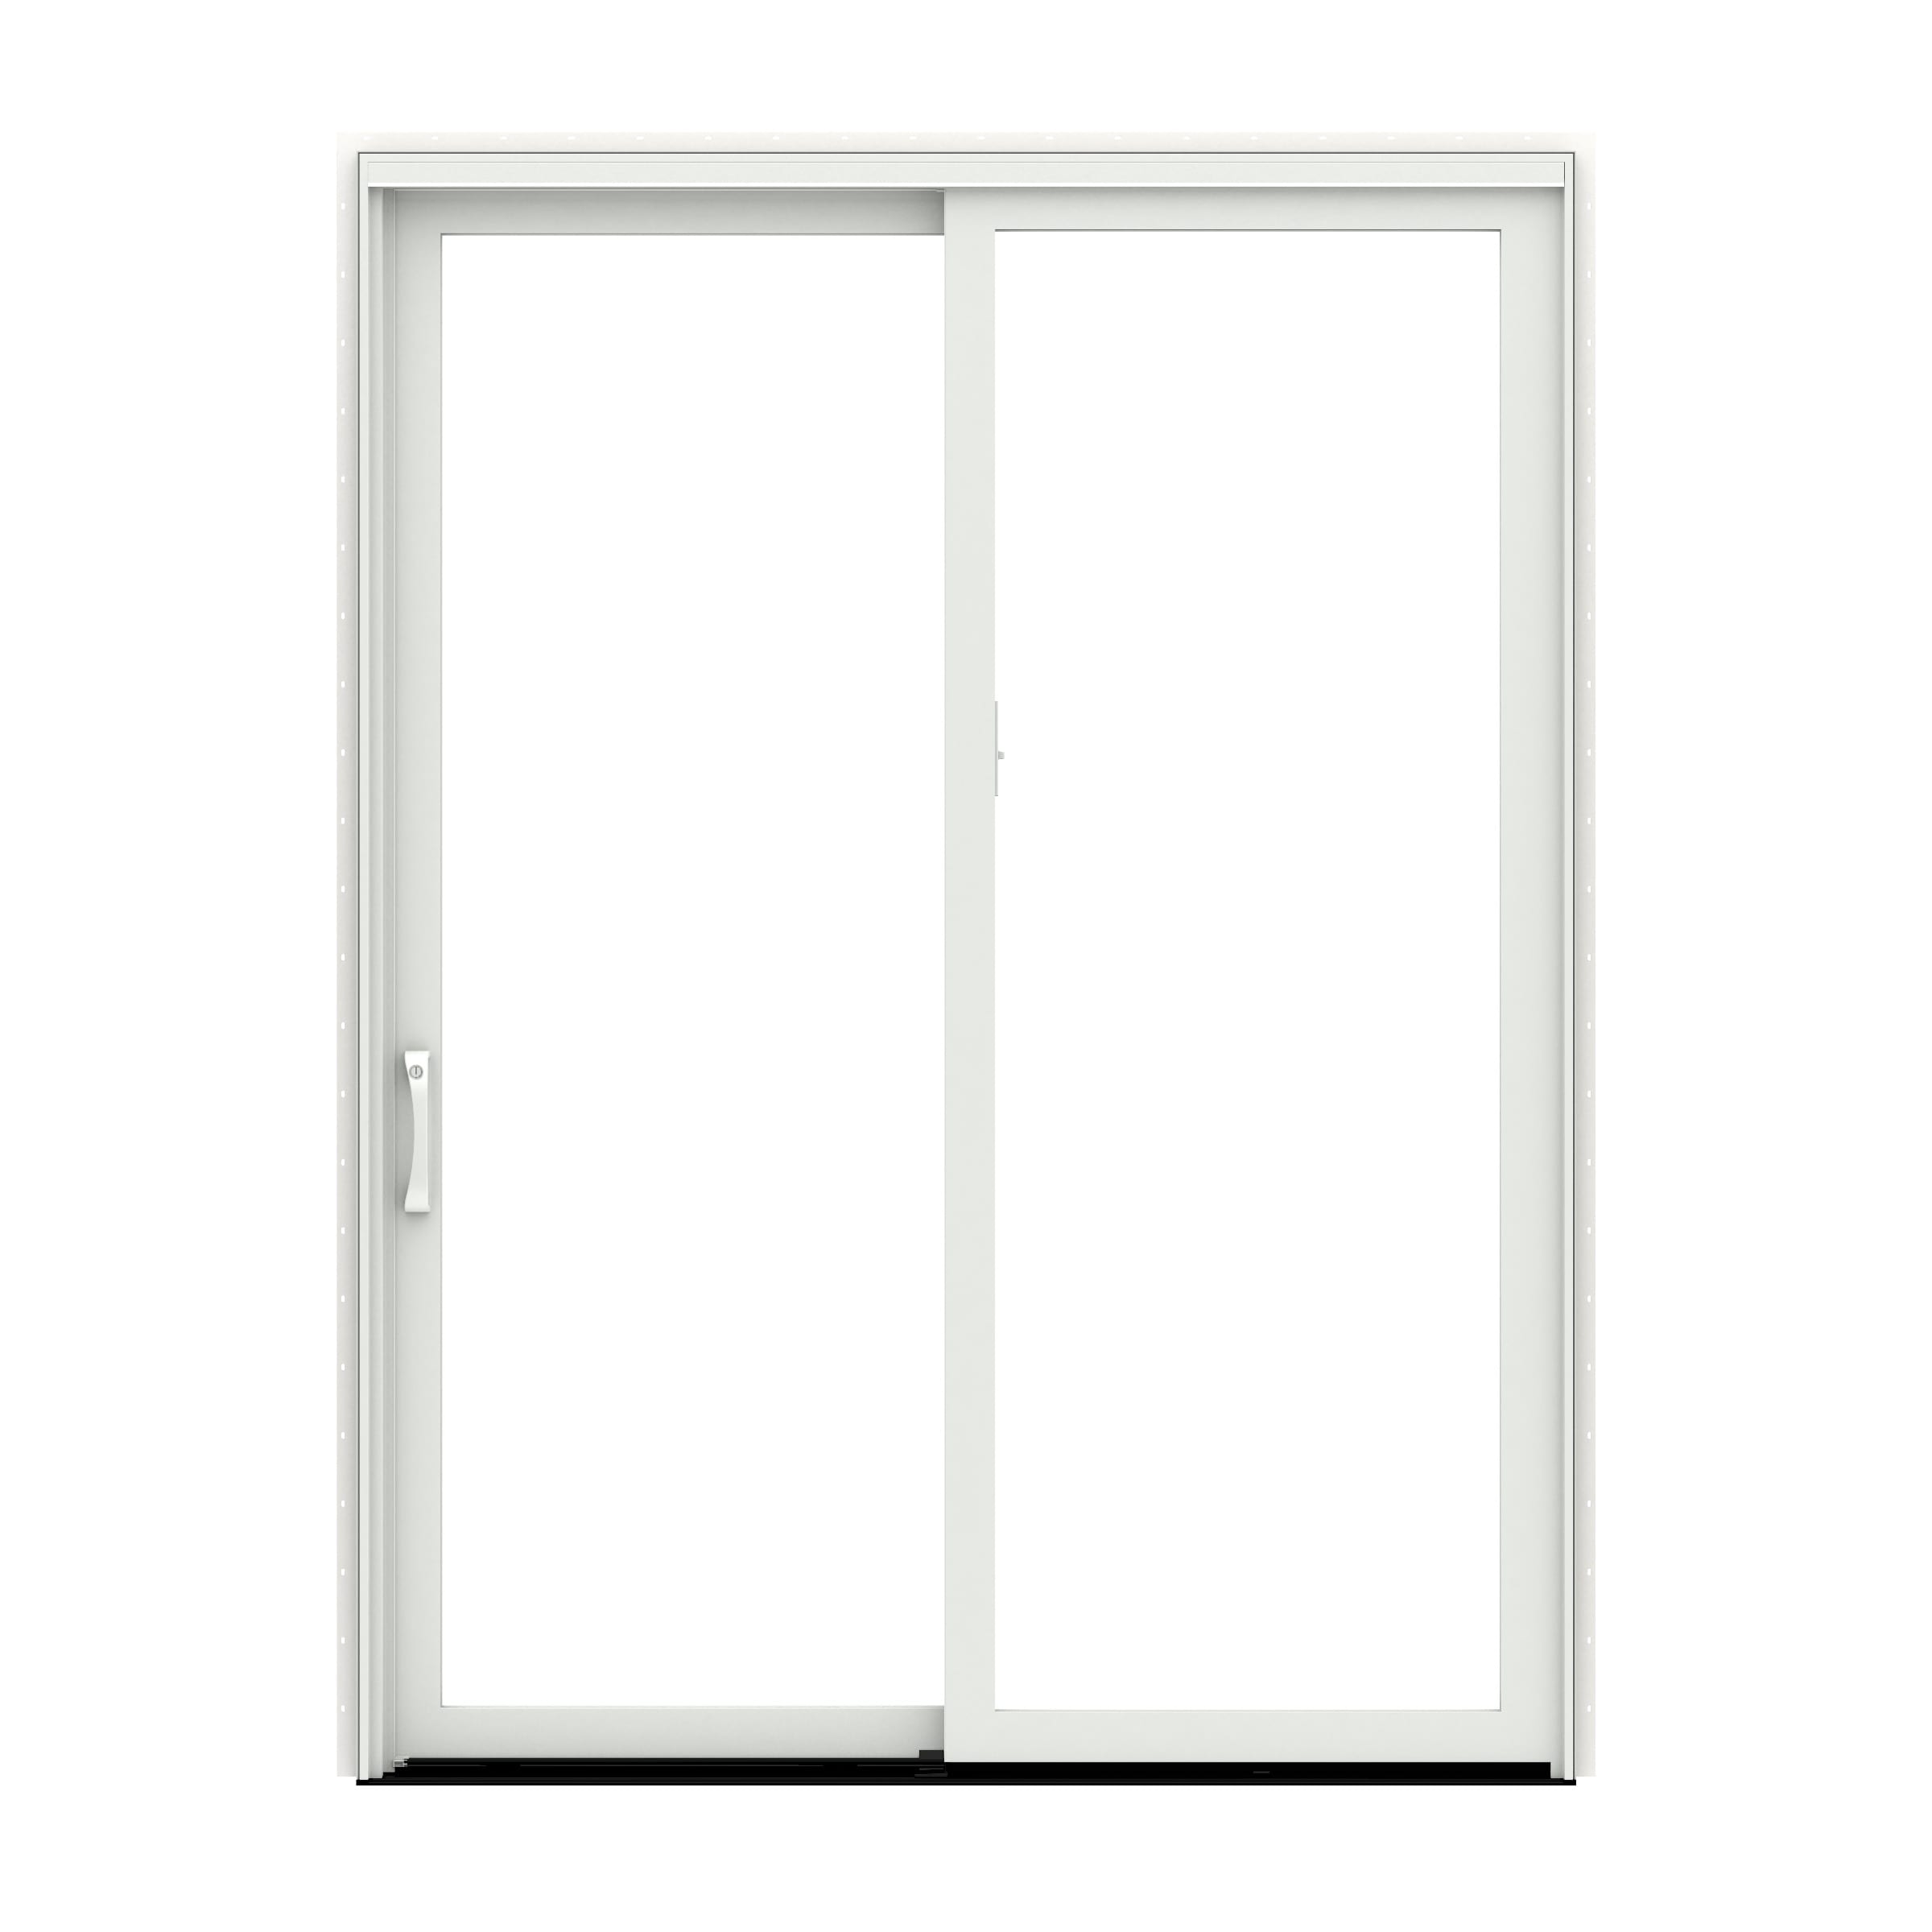 Impervia Series 96-in x 80-in Low-e Argon White Fiberglass Sliding Left-Hand Sliding Double Patio Door | - Pella 1000011479